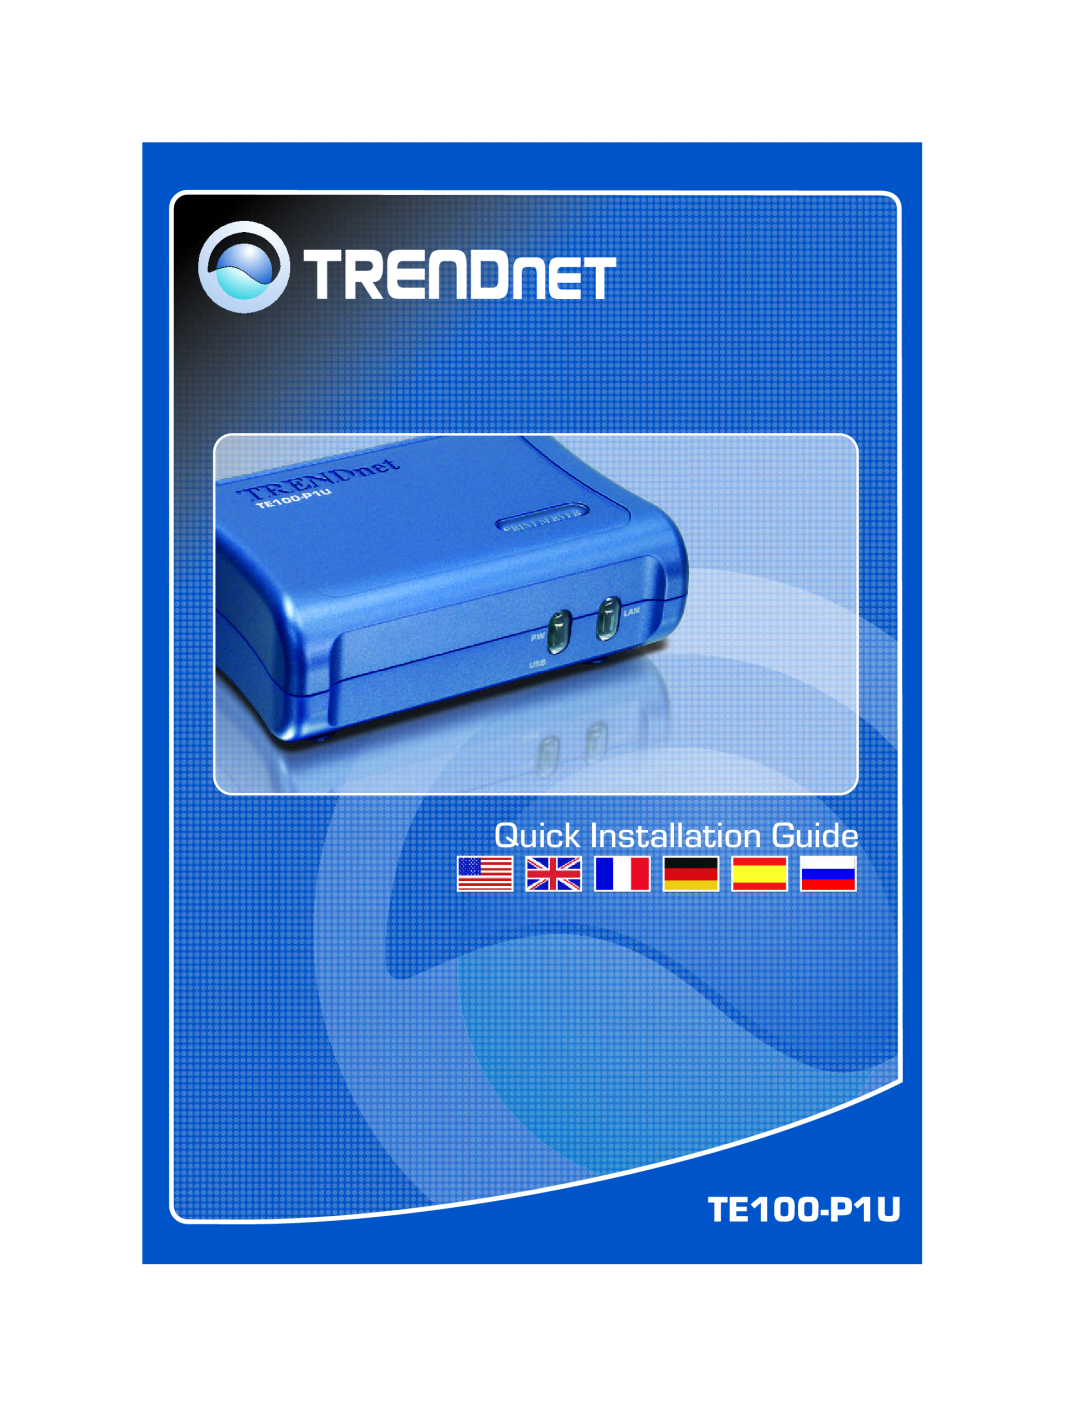 TRENDnet Print Server manual Quick Installation Guide, TE100-P1U 